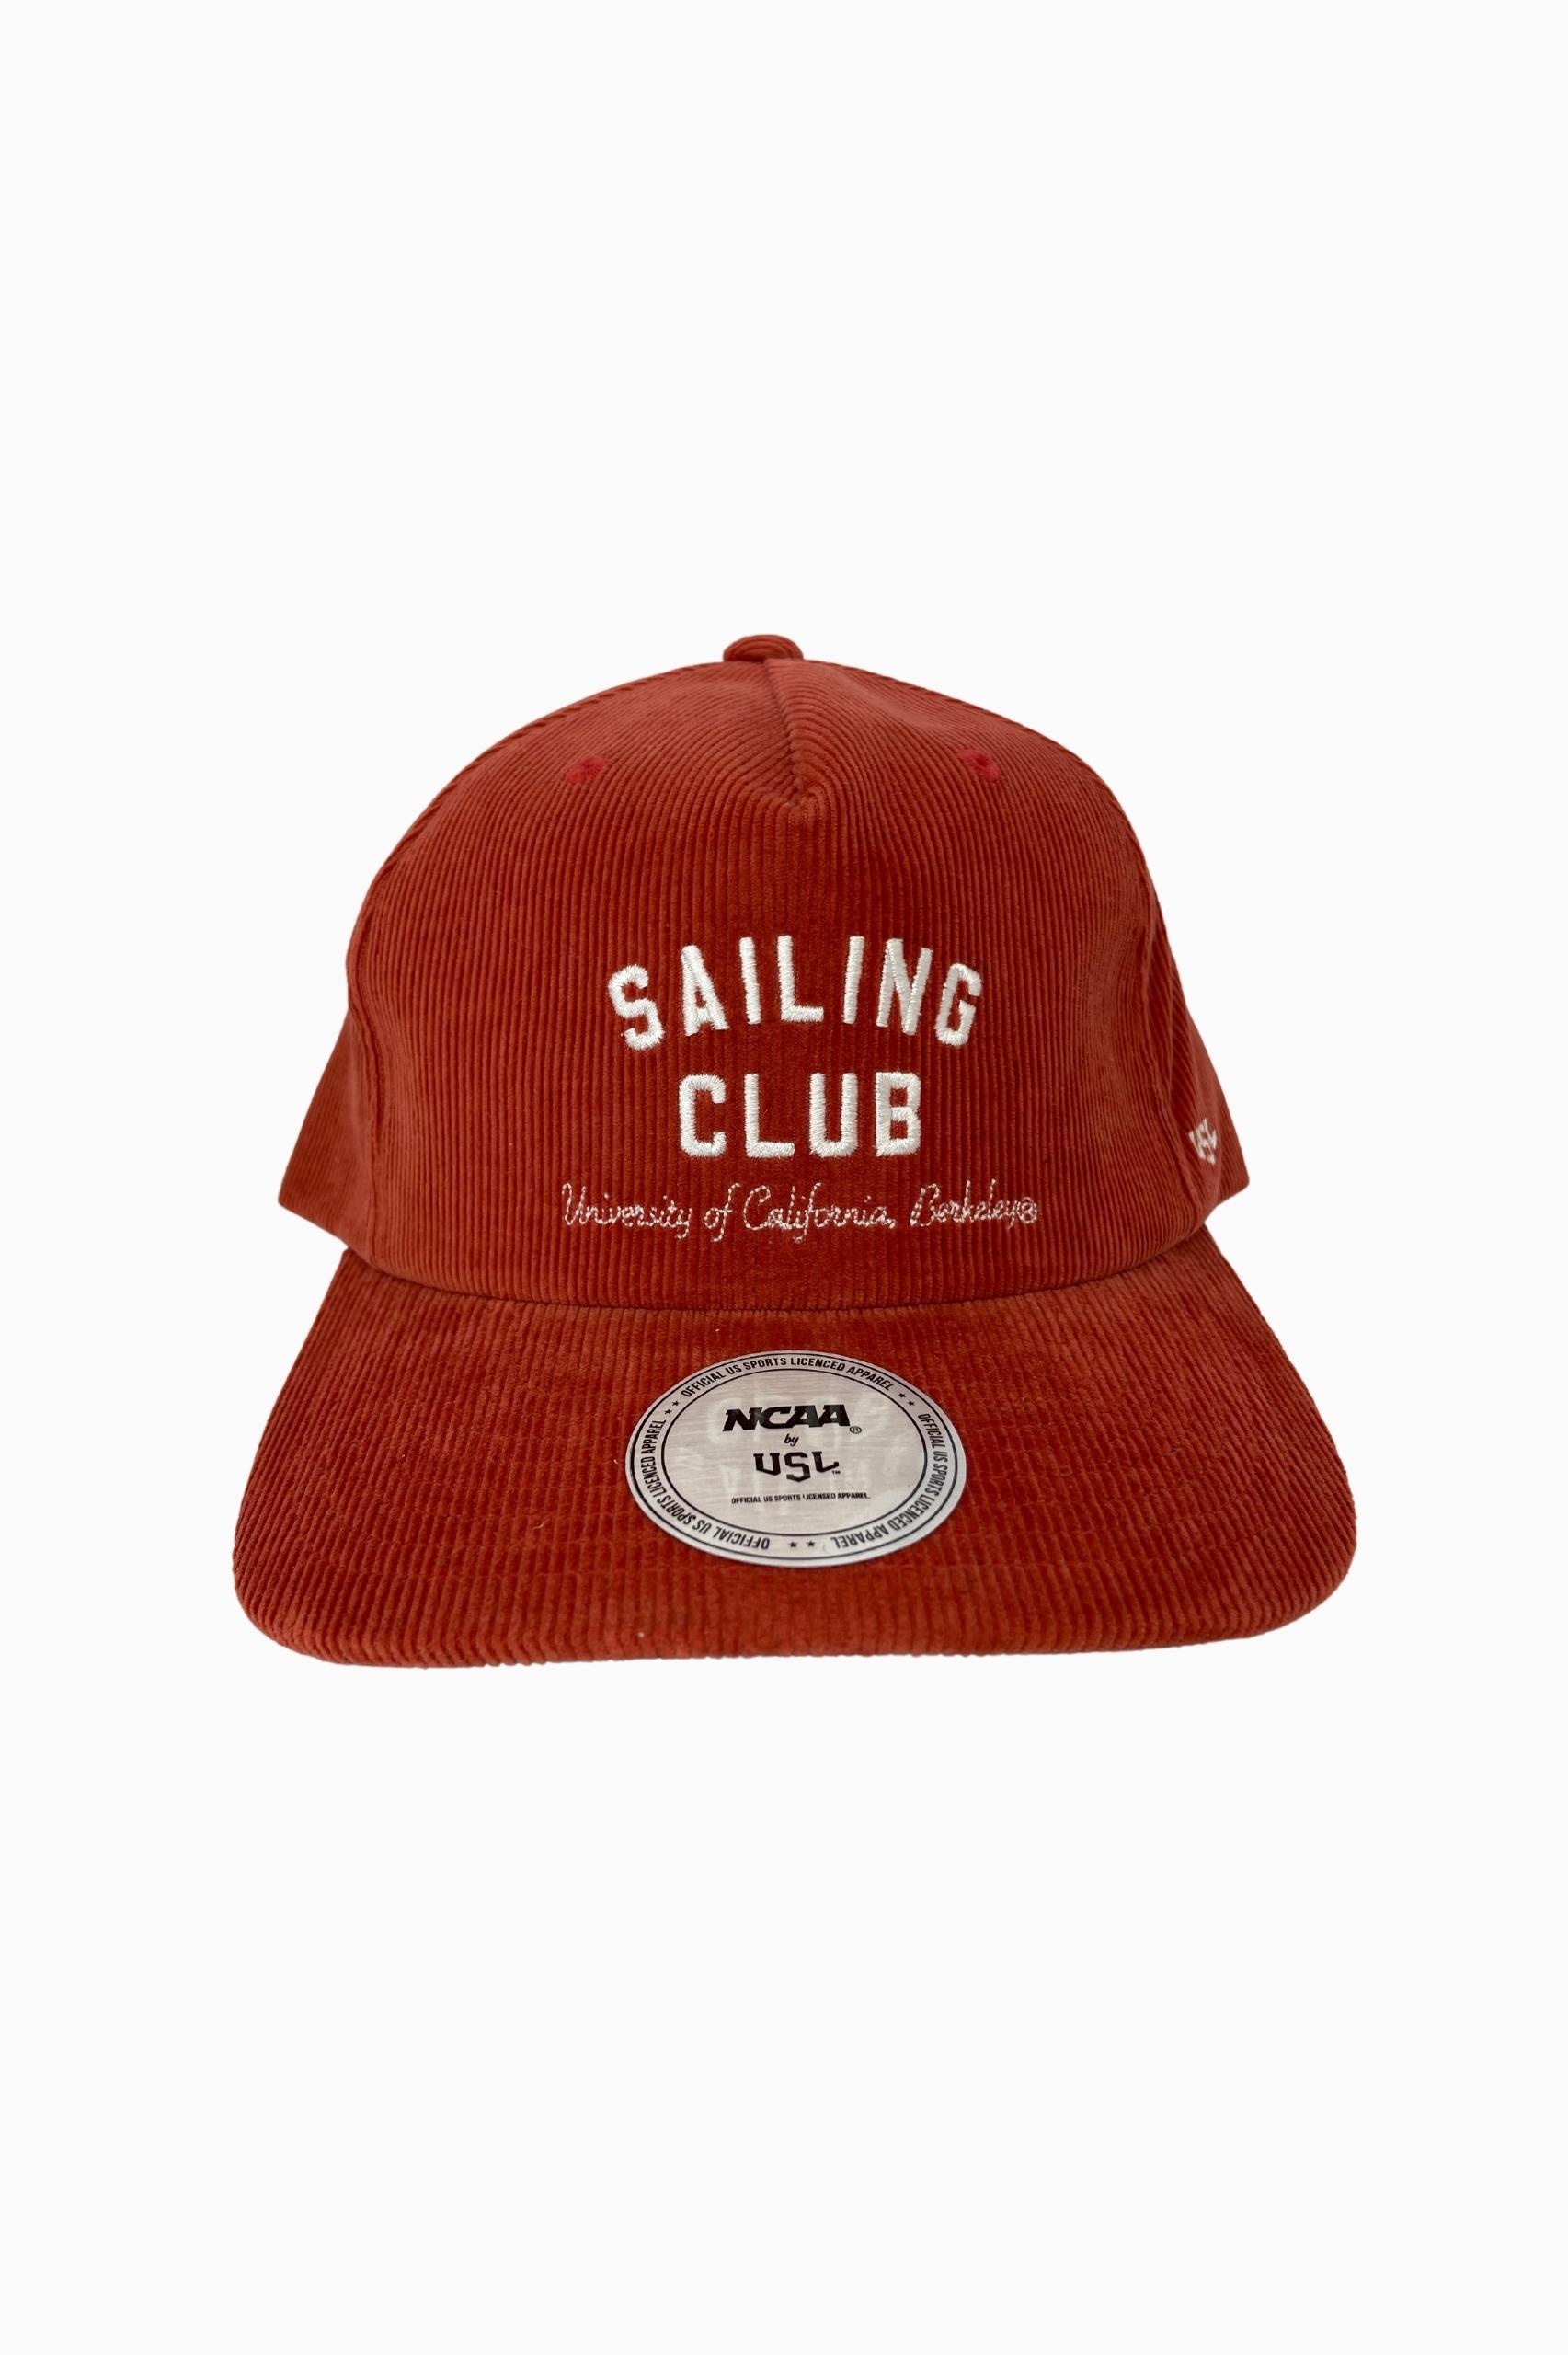 NCAA Berkeley Sailing Club Snapback - Rust Orange Cord